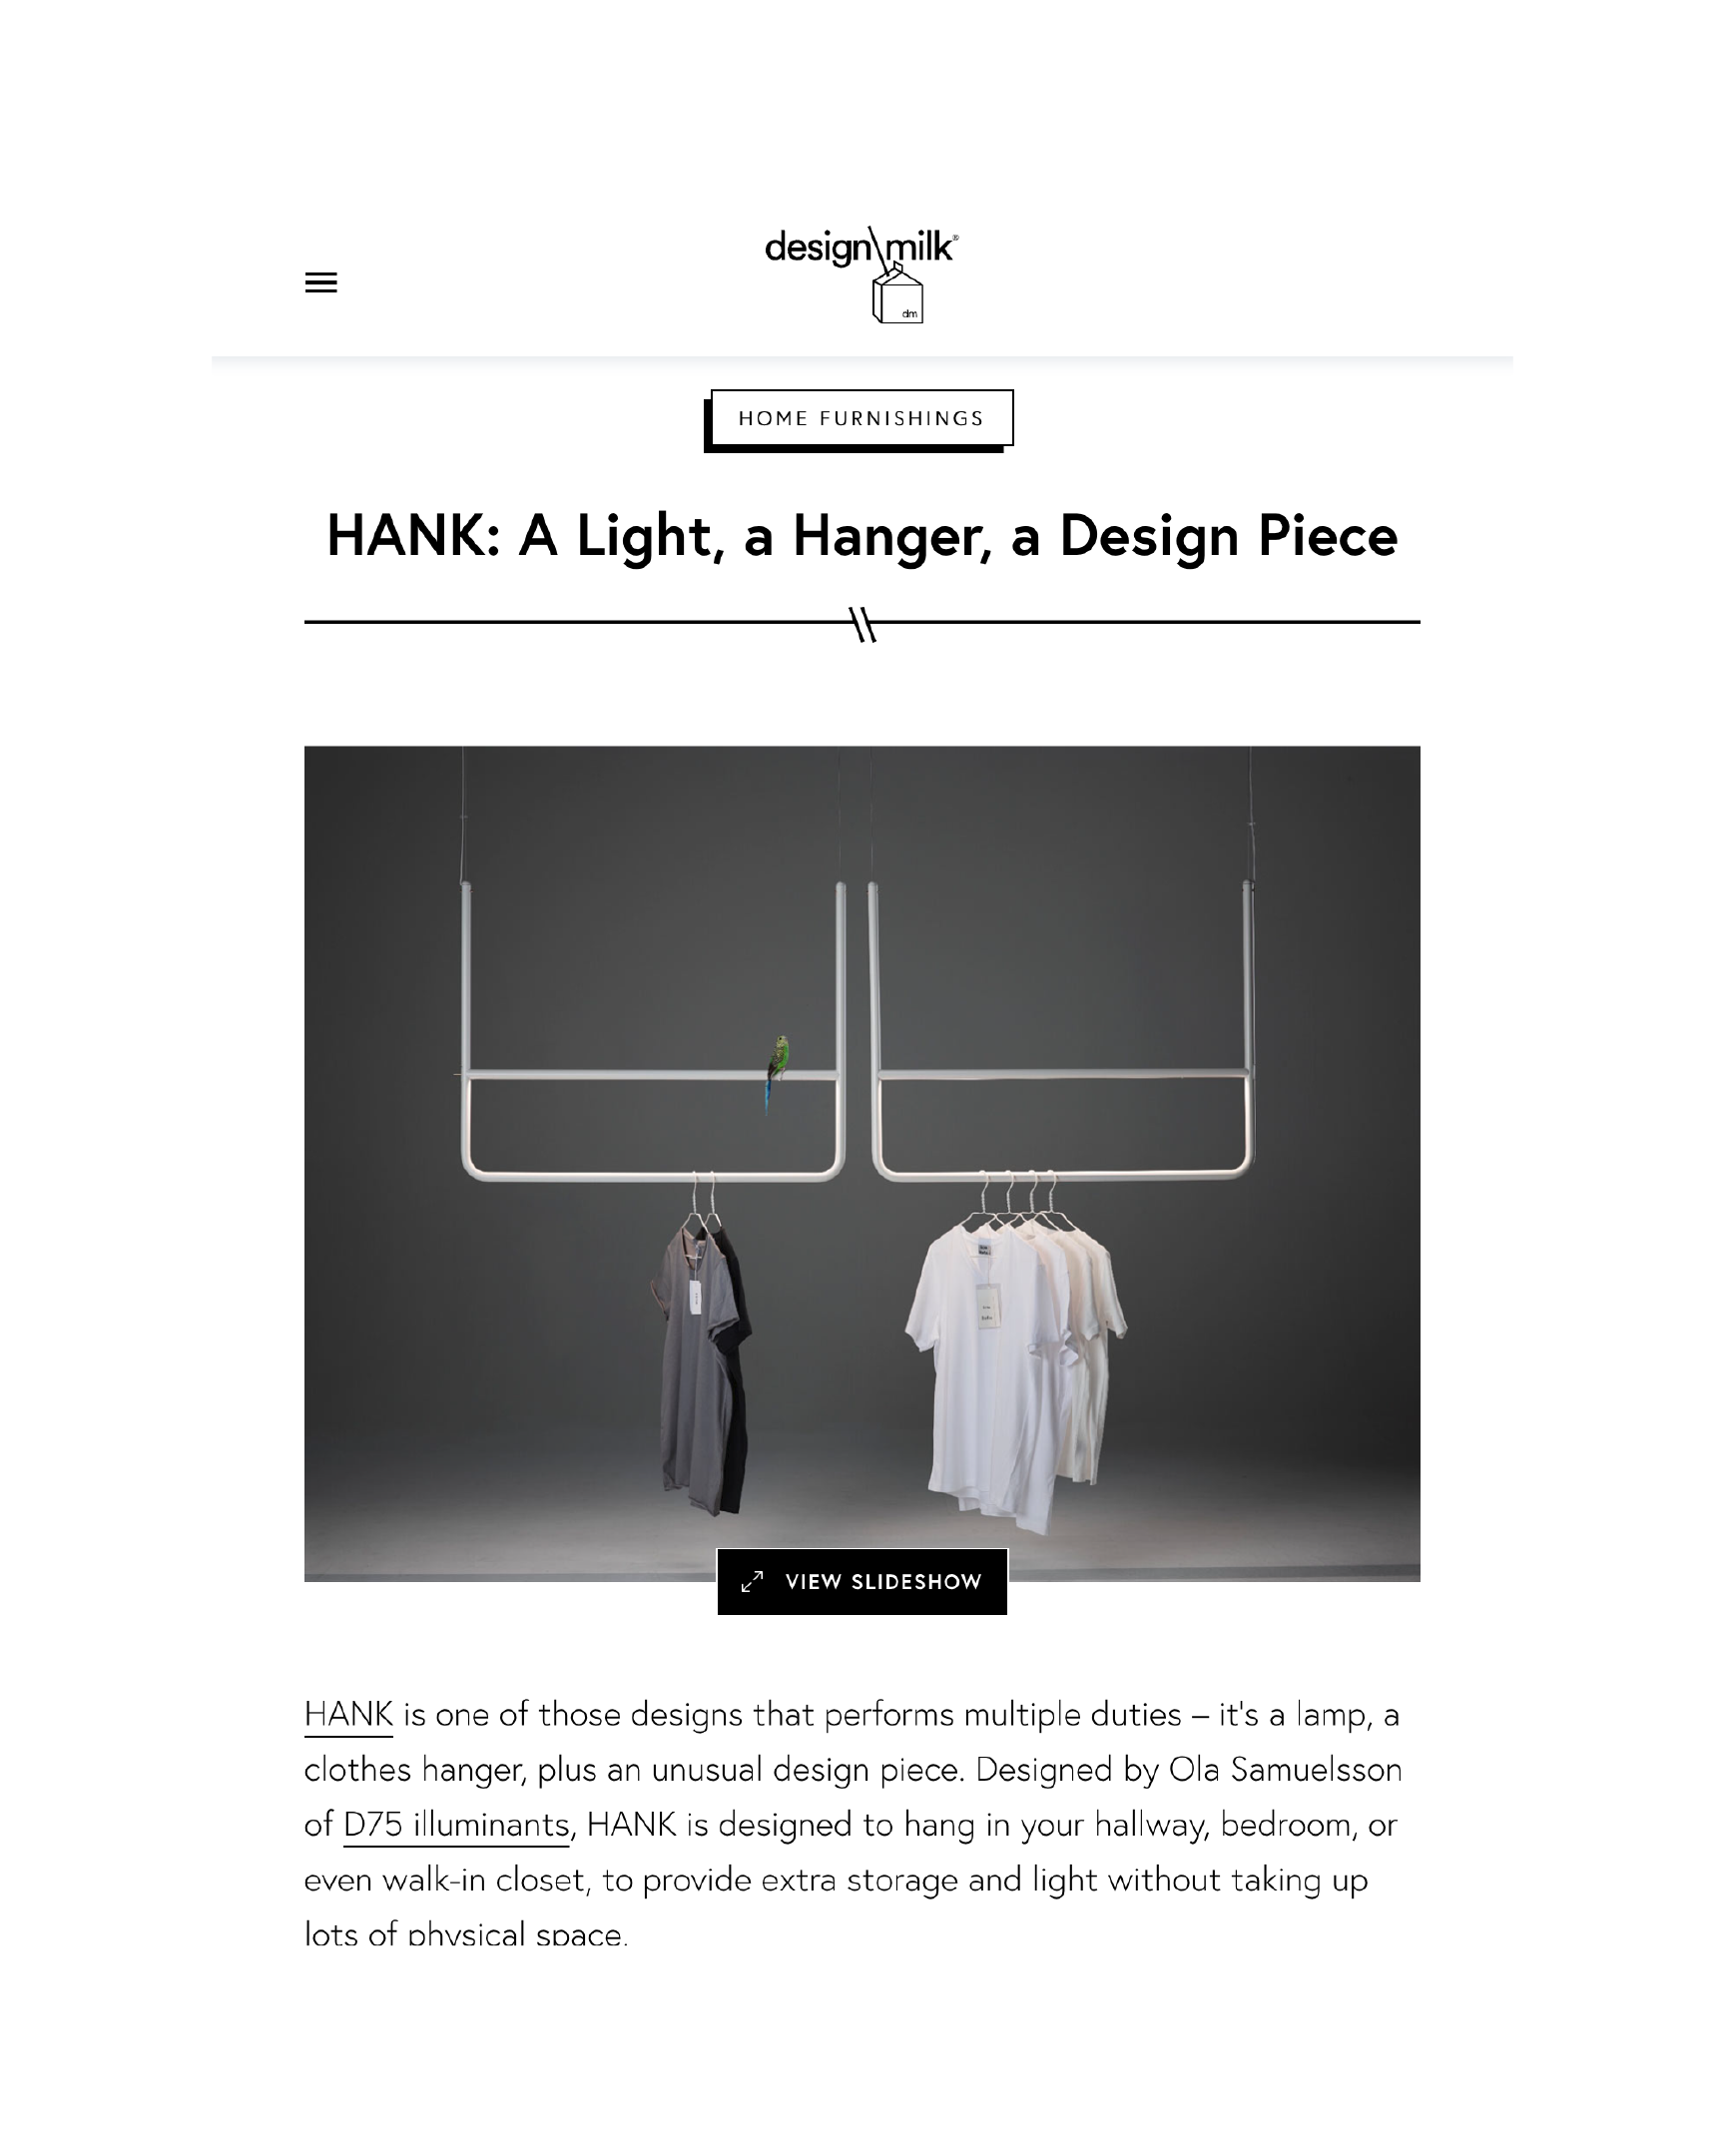 HANK featured in Design Milk